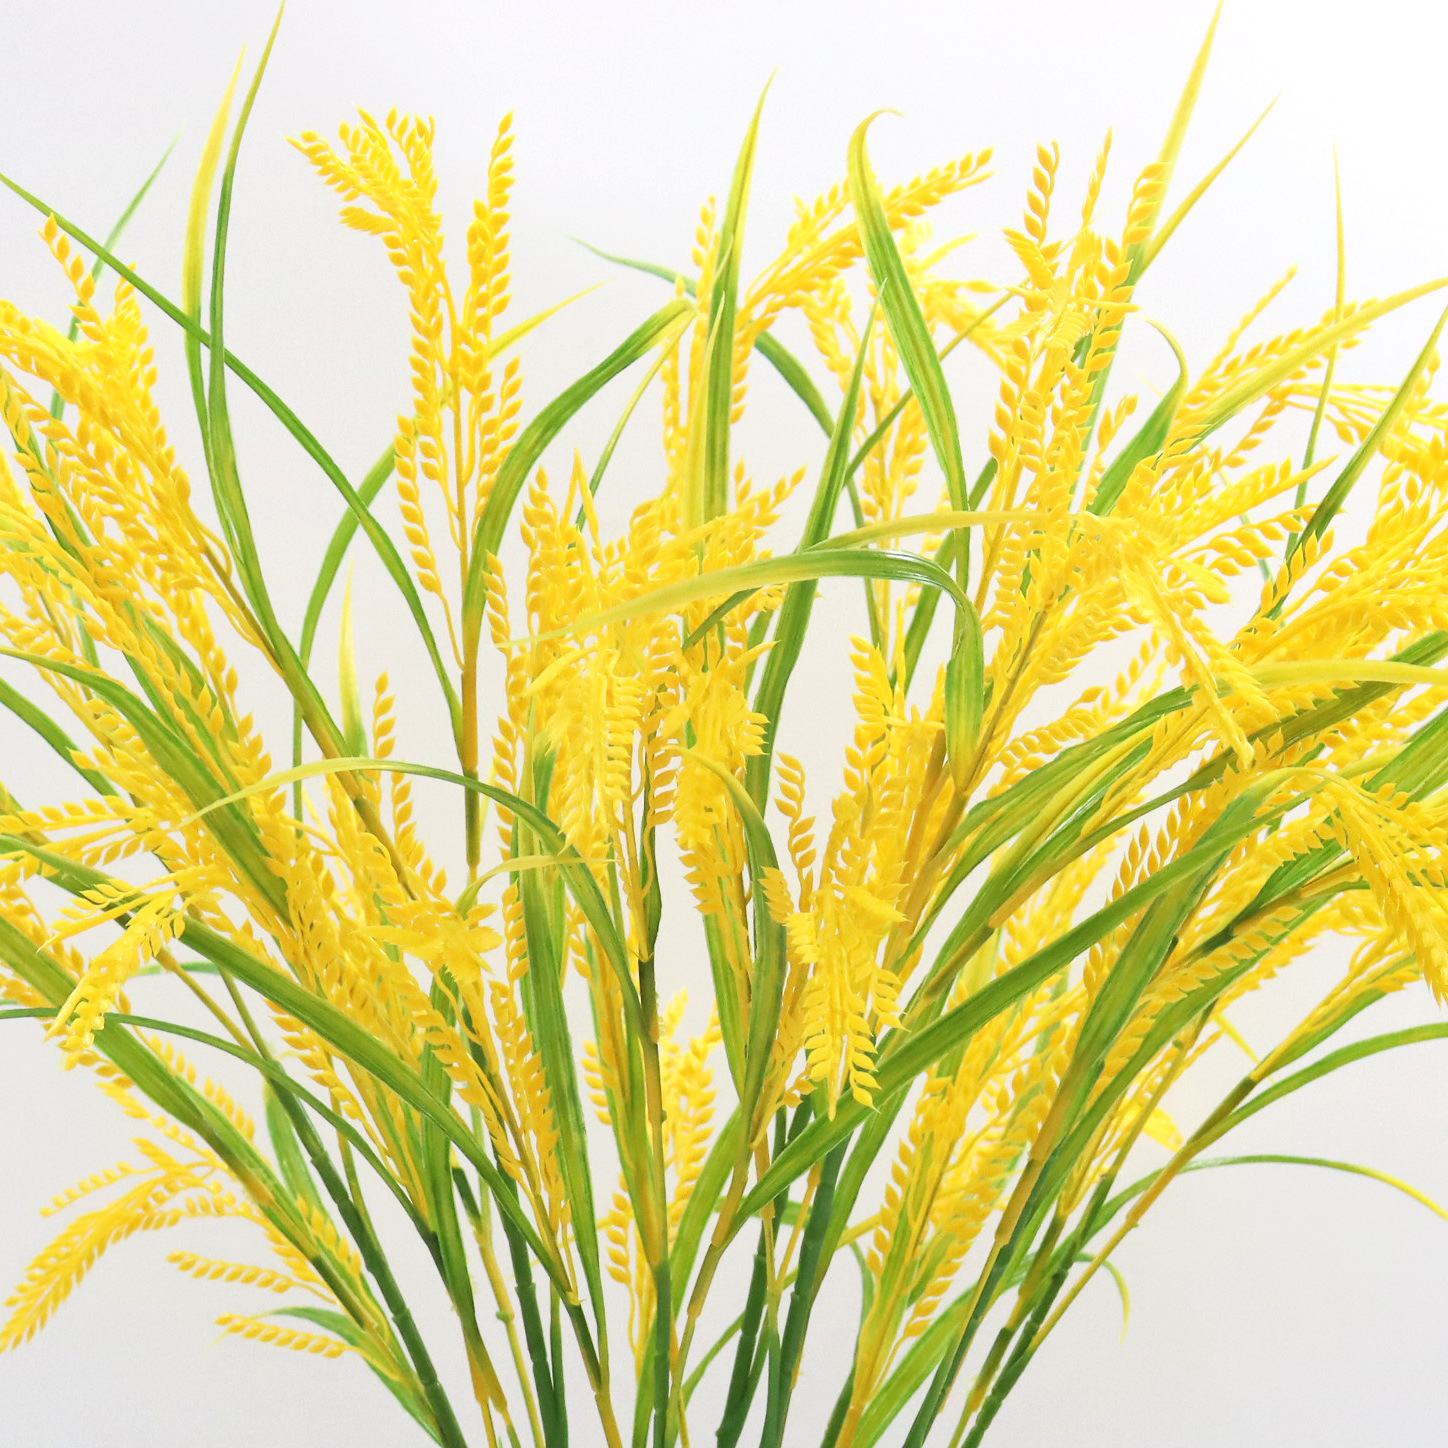 Cross-Border Simulation Plastic Flowers Gold Wheat Harvest Rice Decorative Greenery Decoration Model Barley Props Bouquet